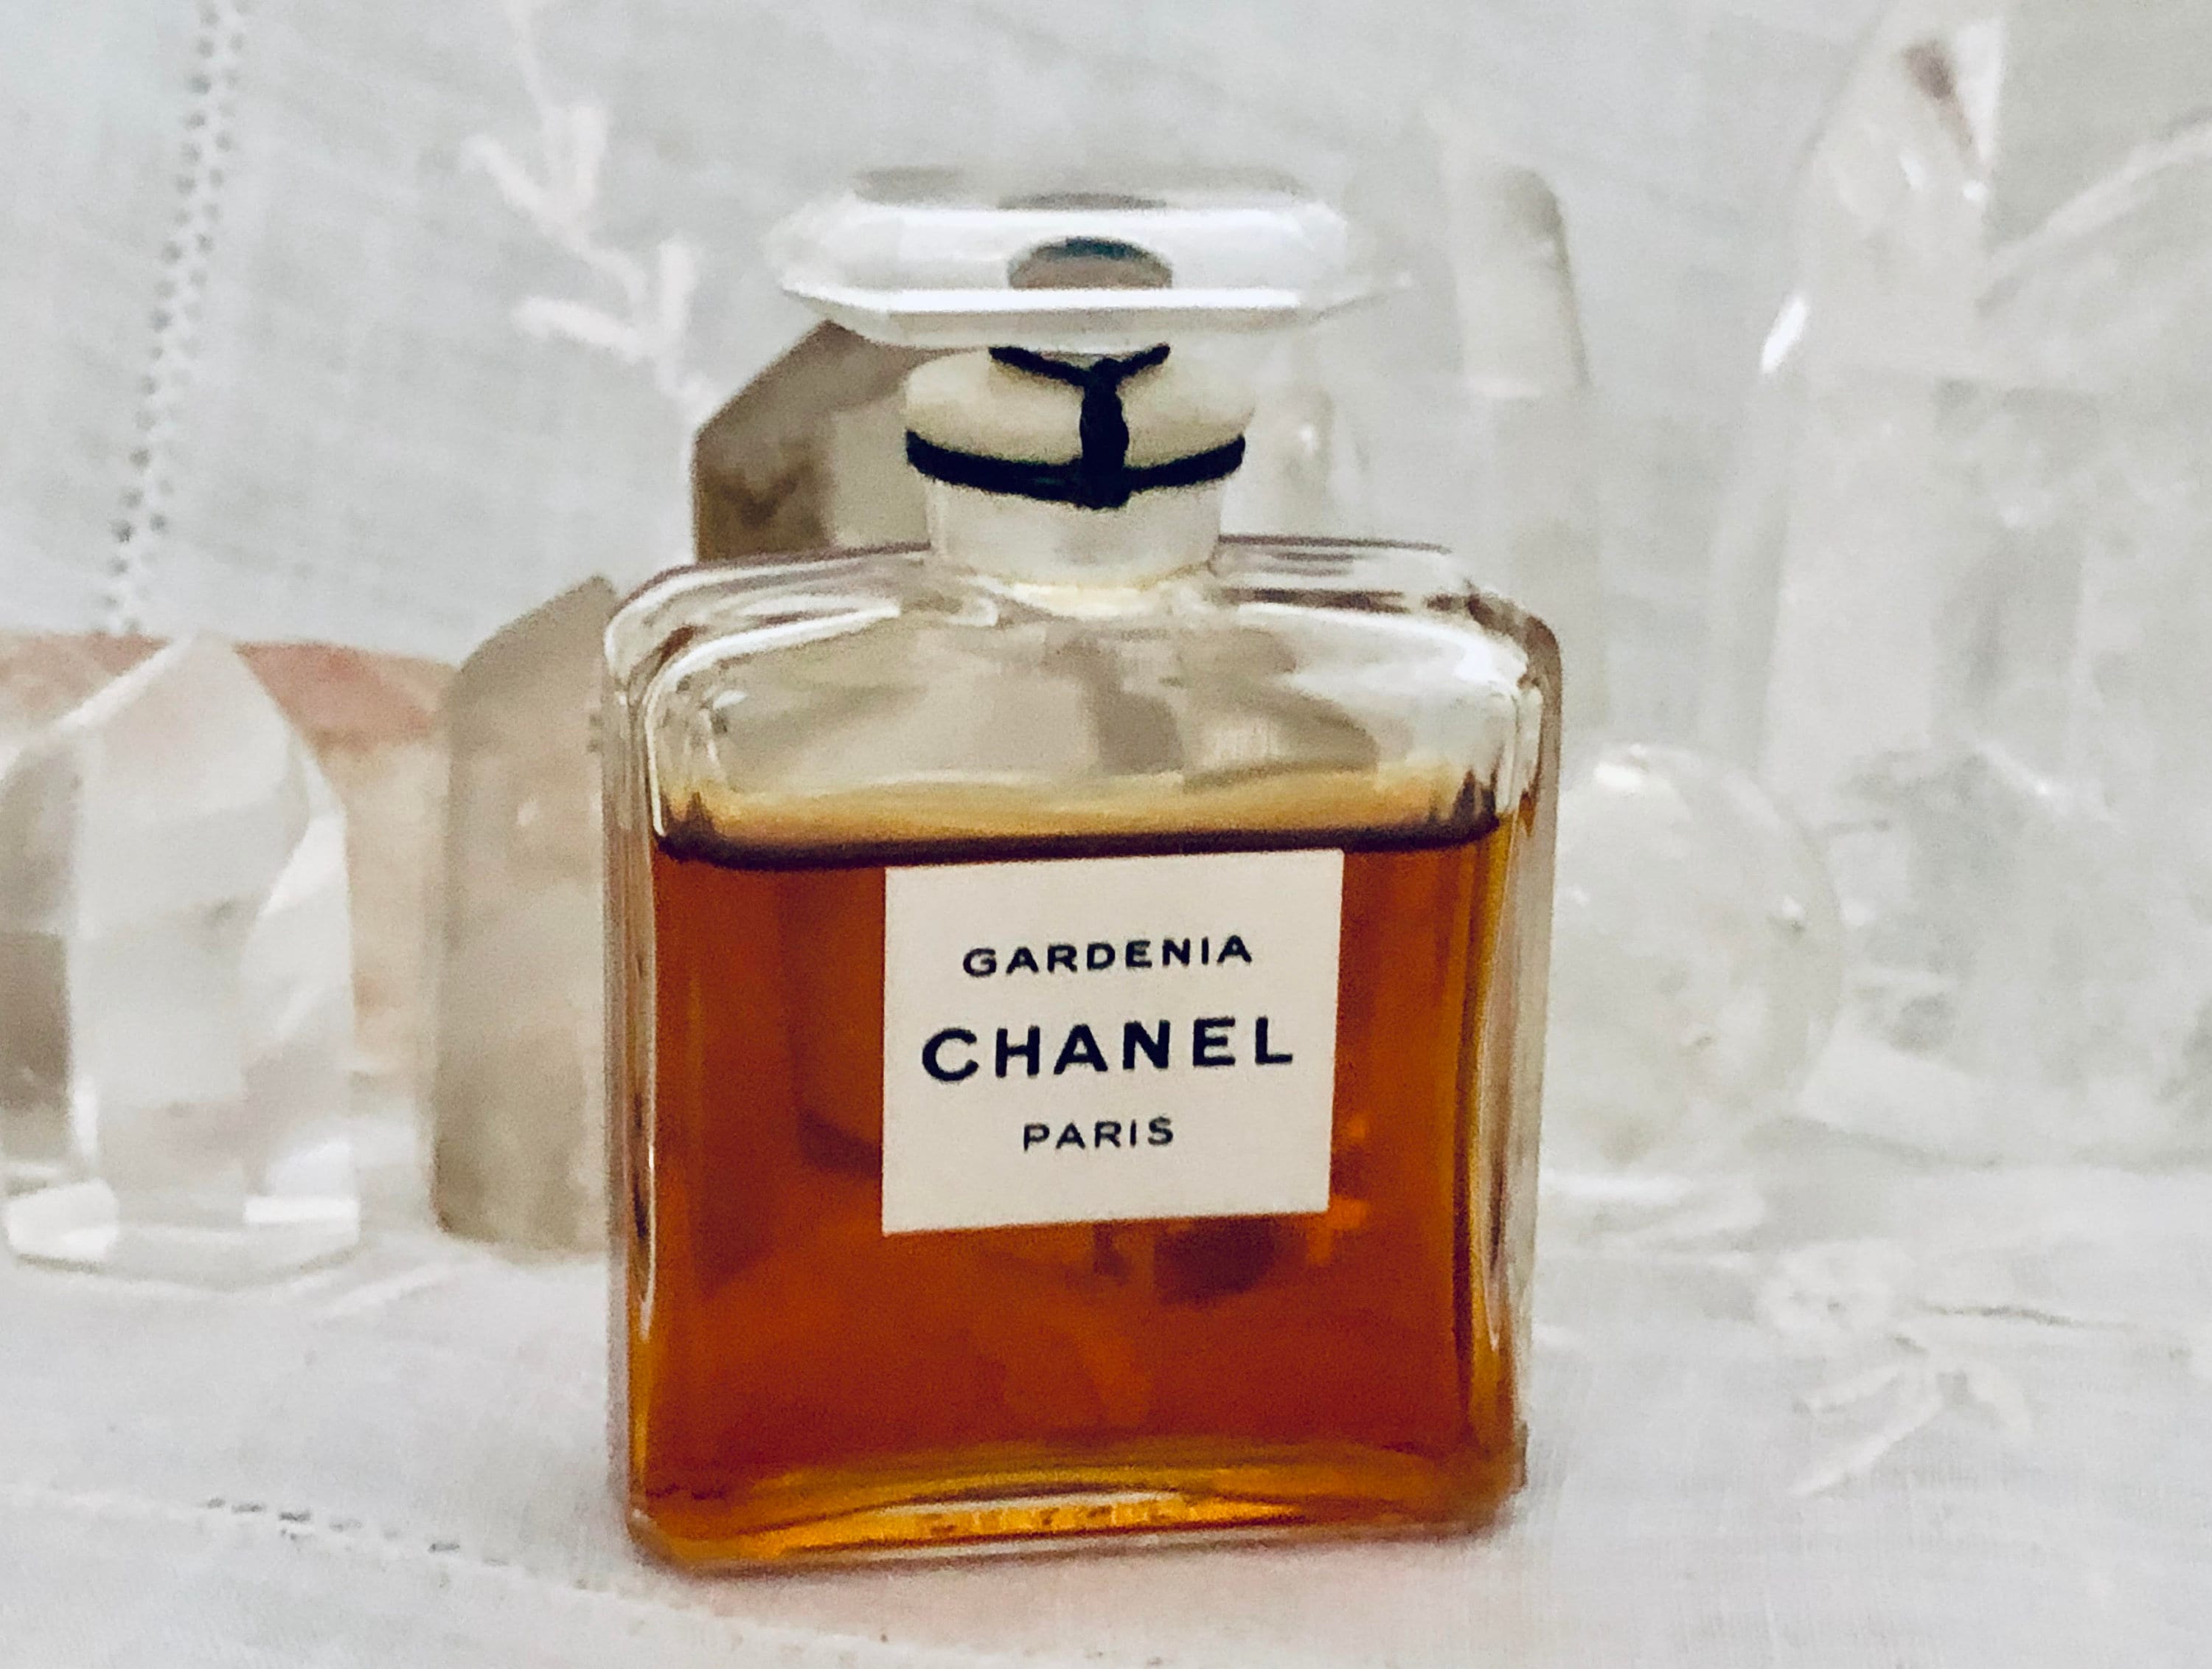 Chanel, Gardénia, Gardenia, DECANTED SAMPLE from Flacon, Parfum Extrait,  1925, Paris, France ..